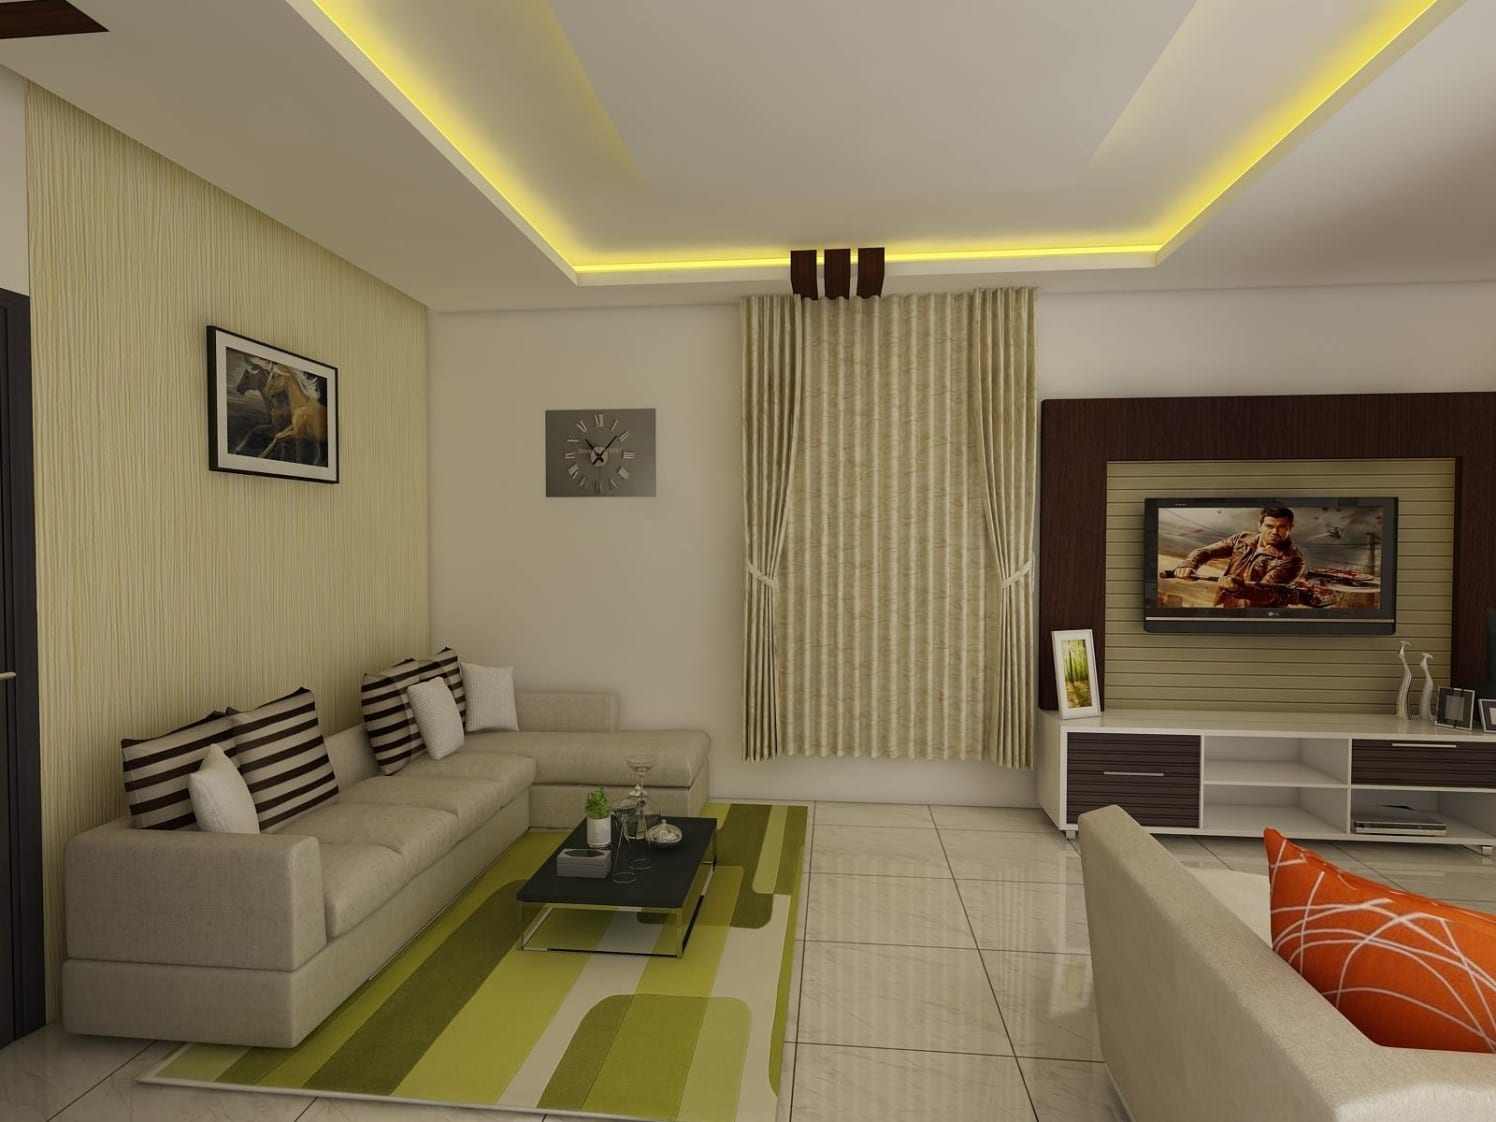 30 BEST Modern Gypsum Ceiling Designs for Living room ...